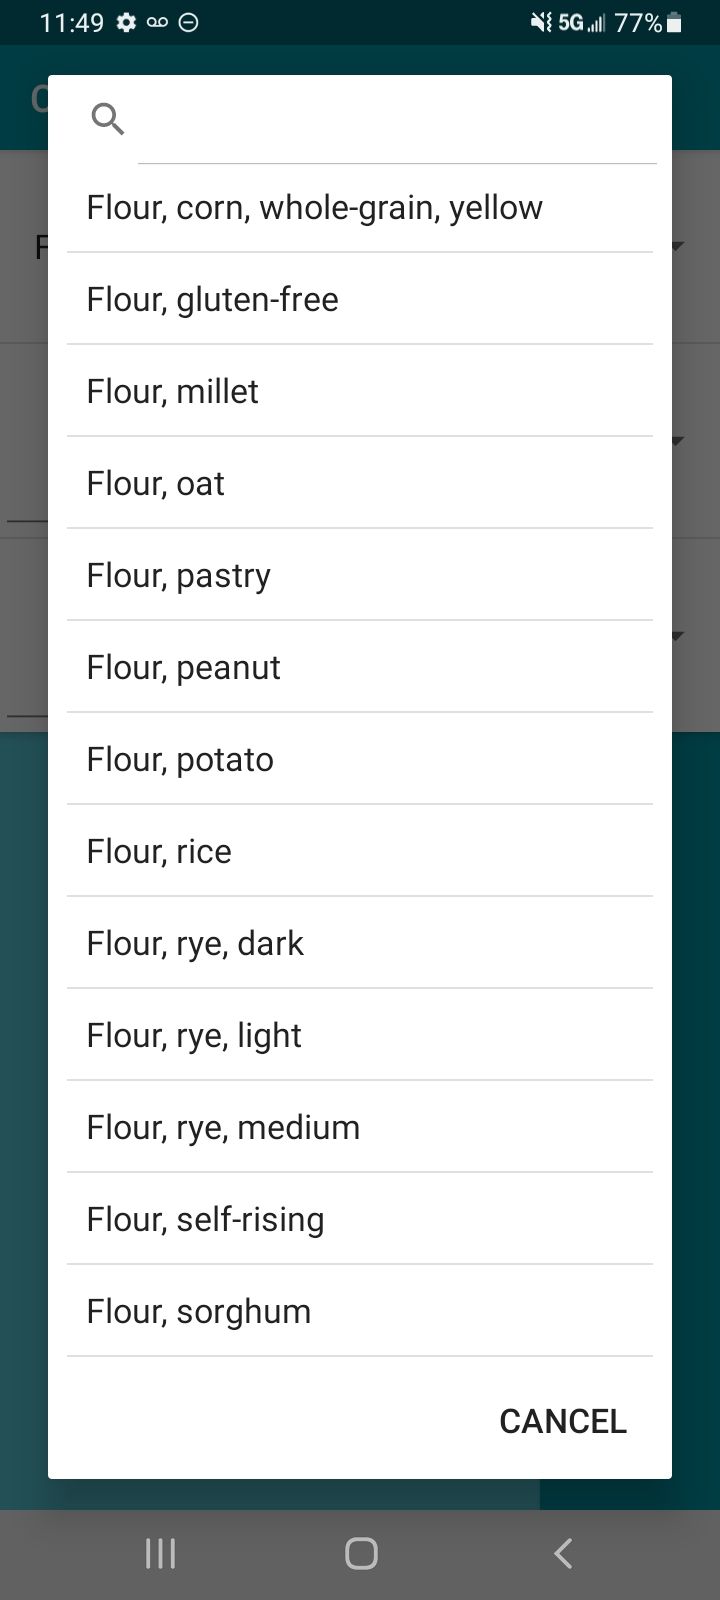 Choosing a type of flour in the Cupful app.